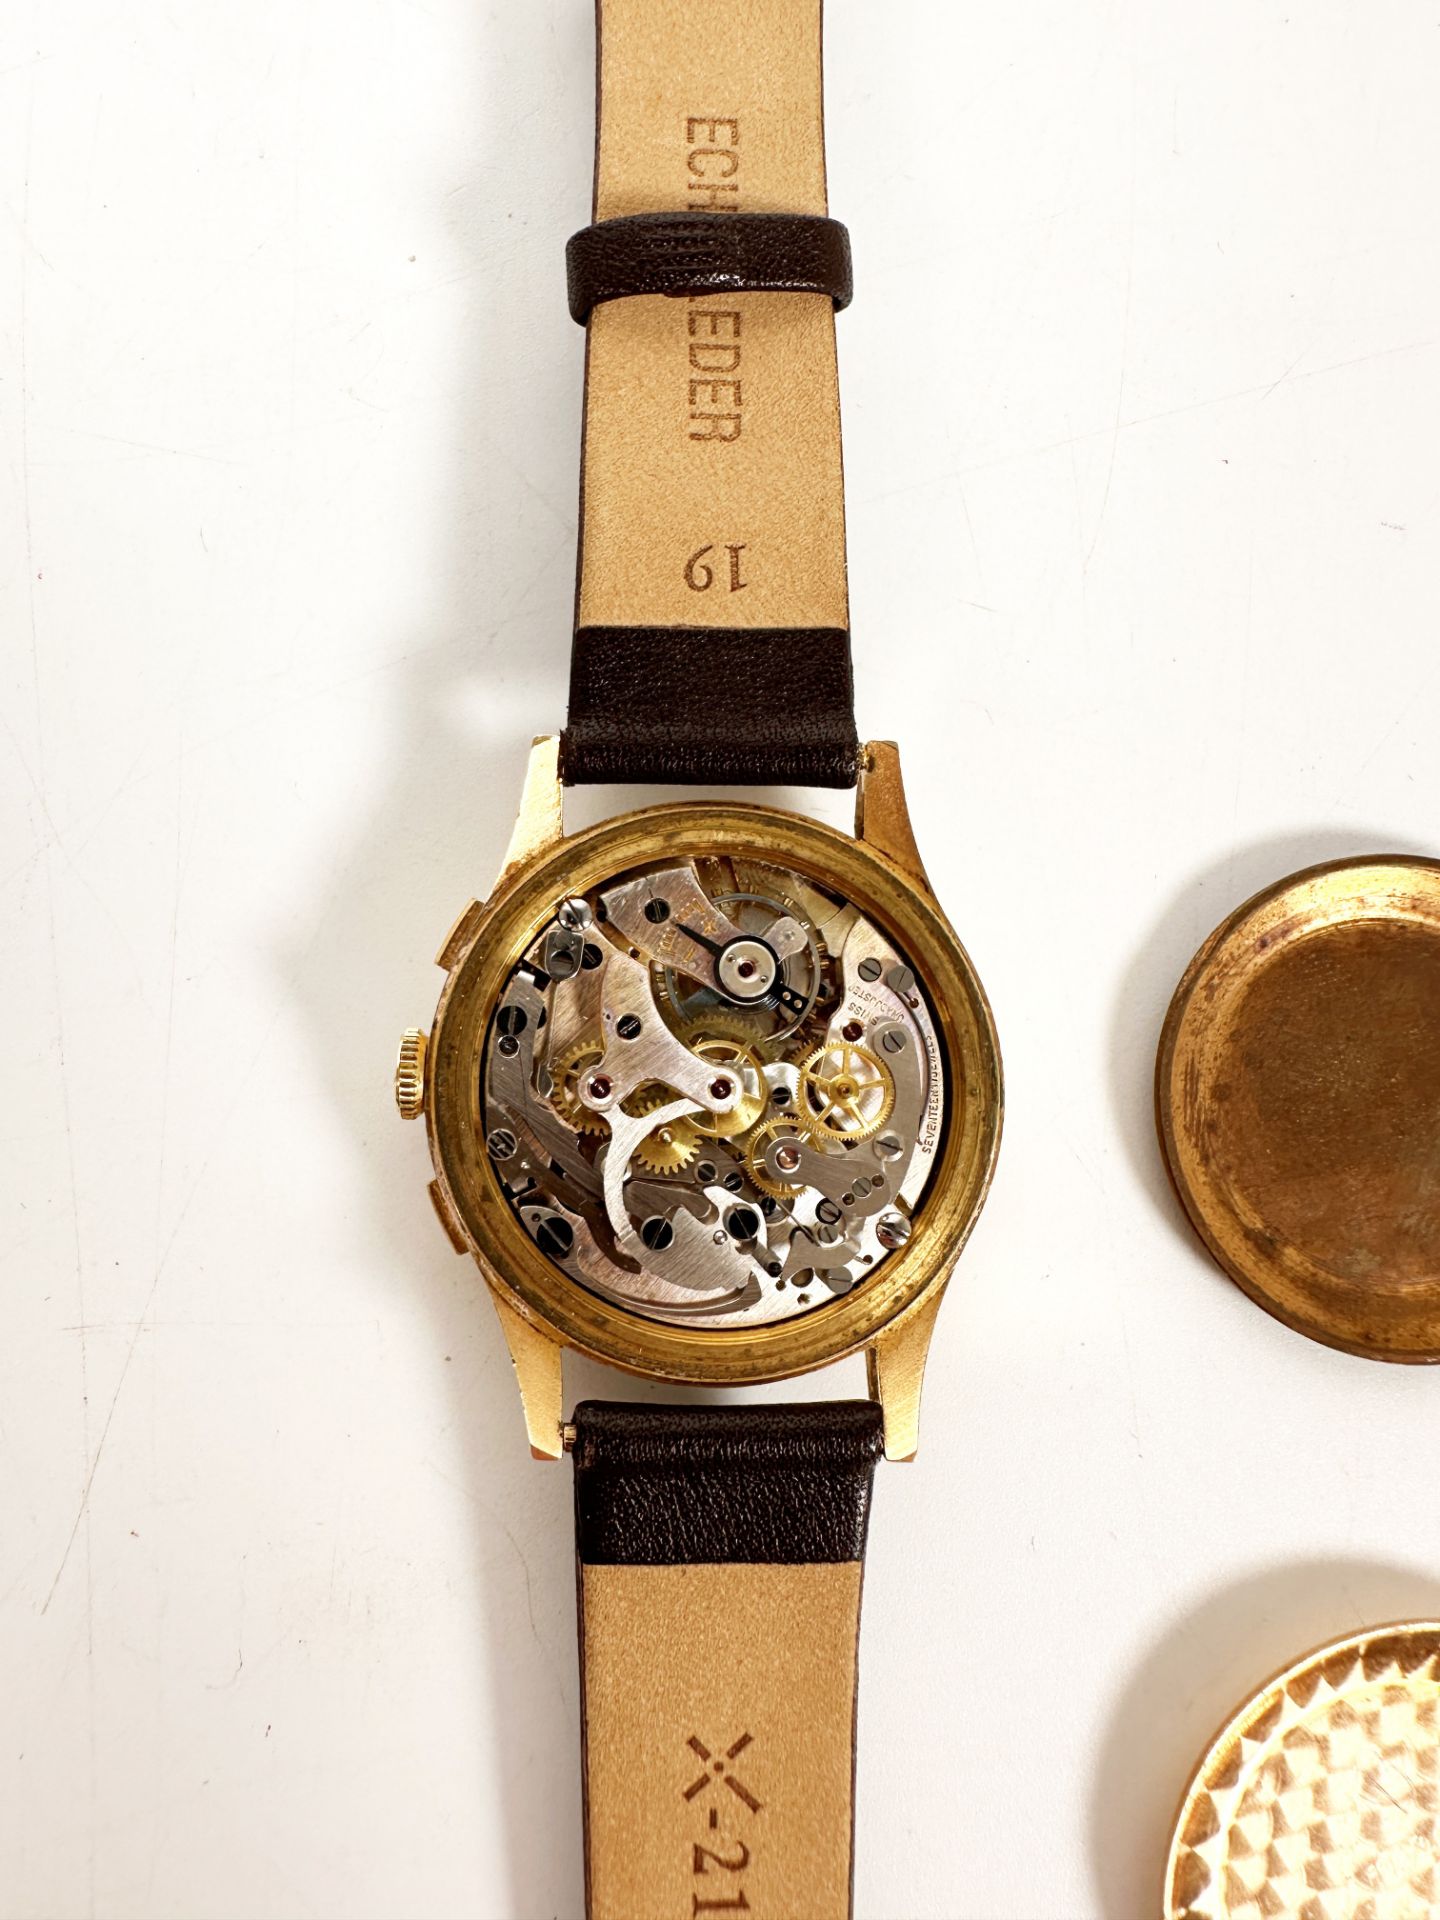 No Reserve - Docker Chronograph Suisse - Men's watch.  - Image 6 of 7